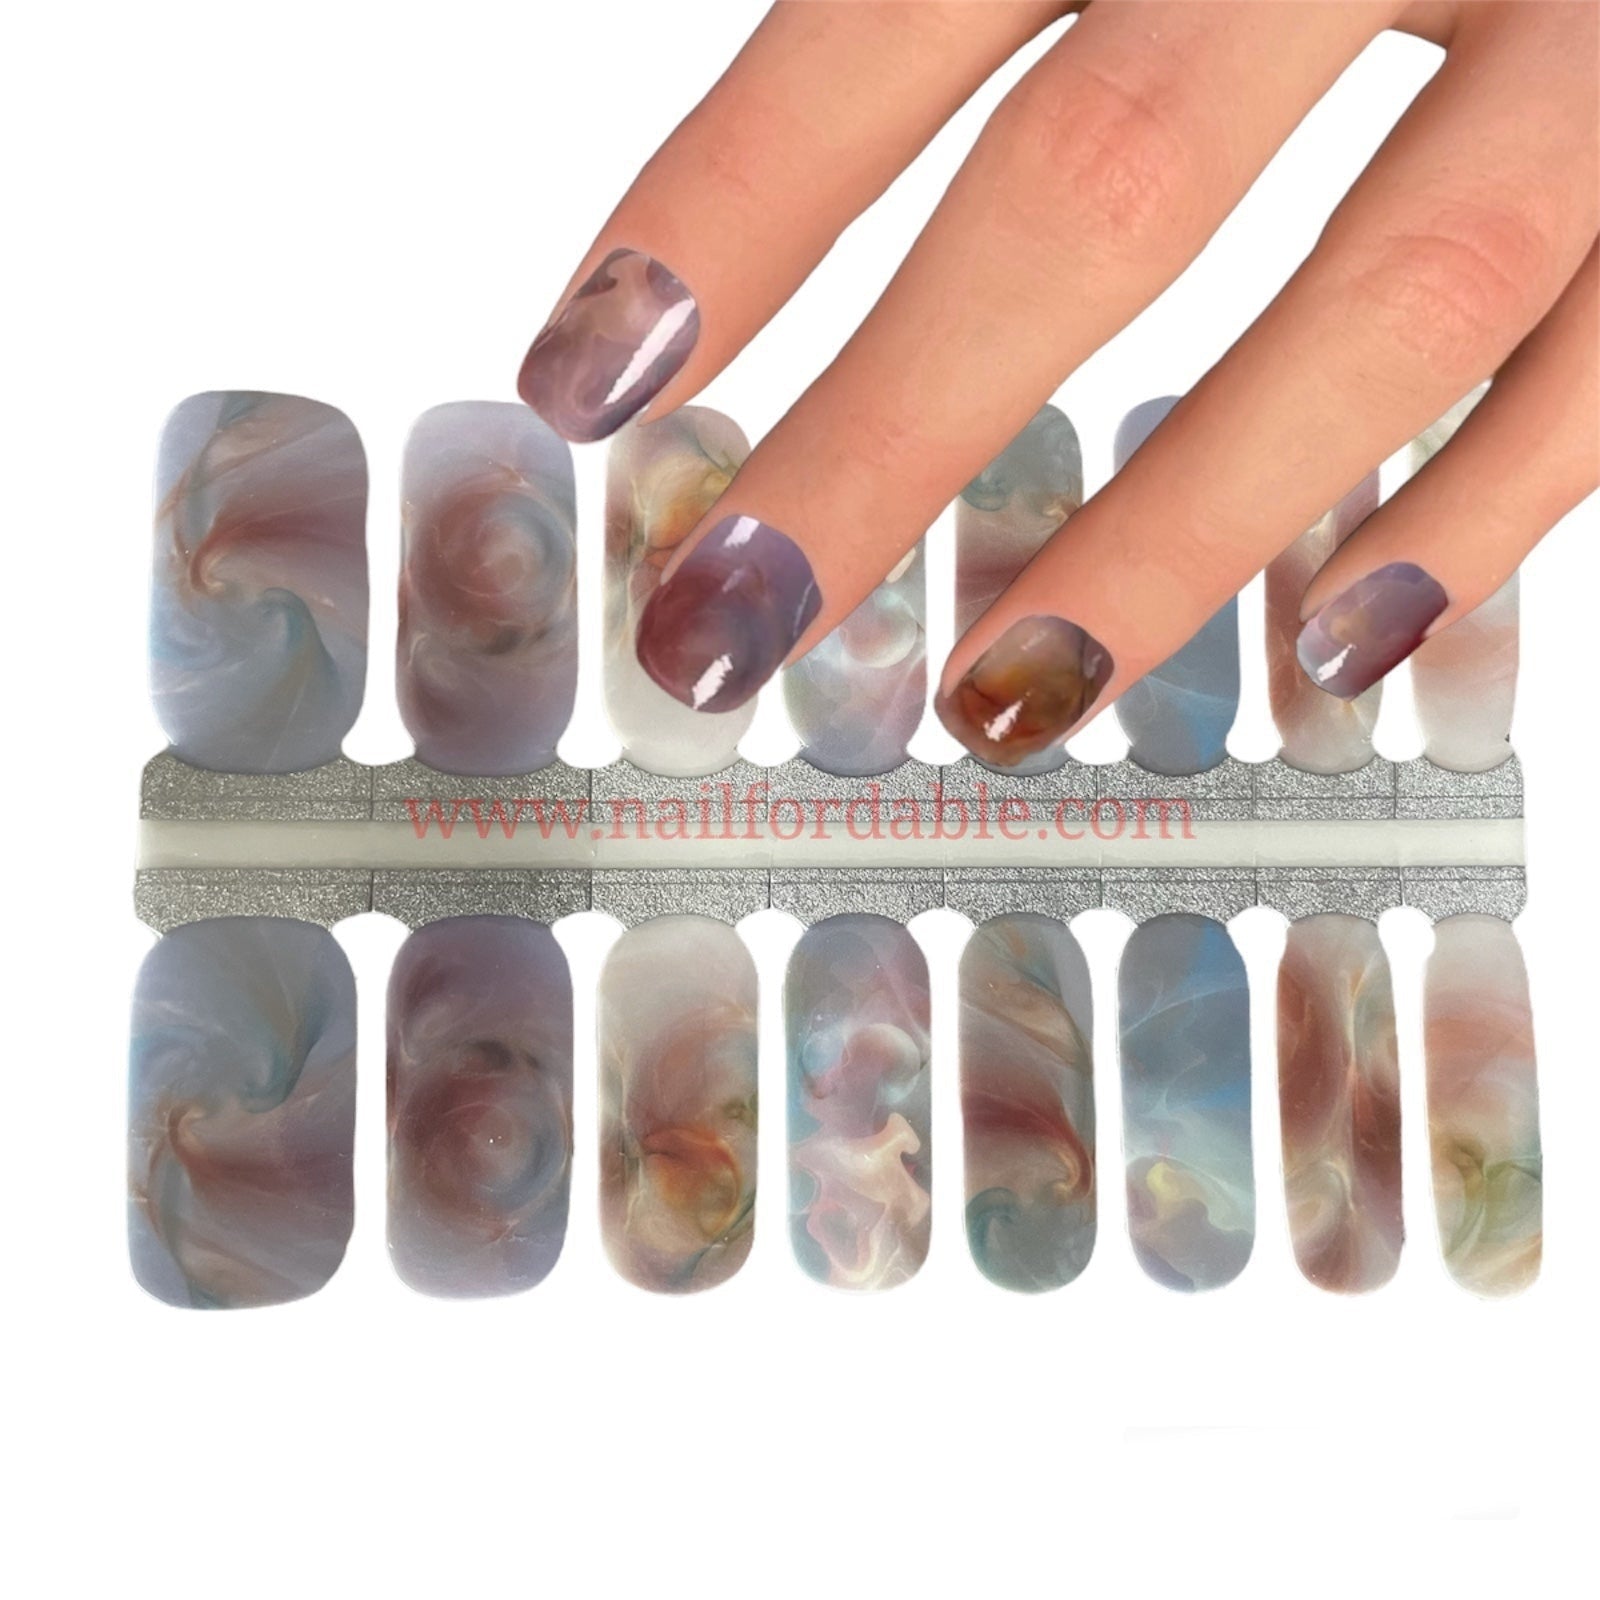 Pearls of the Ocean Nail Wraps | Semi Cured Gel Wraps | Gel Nail Wraps |Nail Polish | Nail Stickers